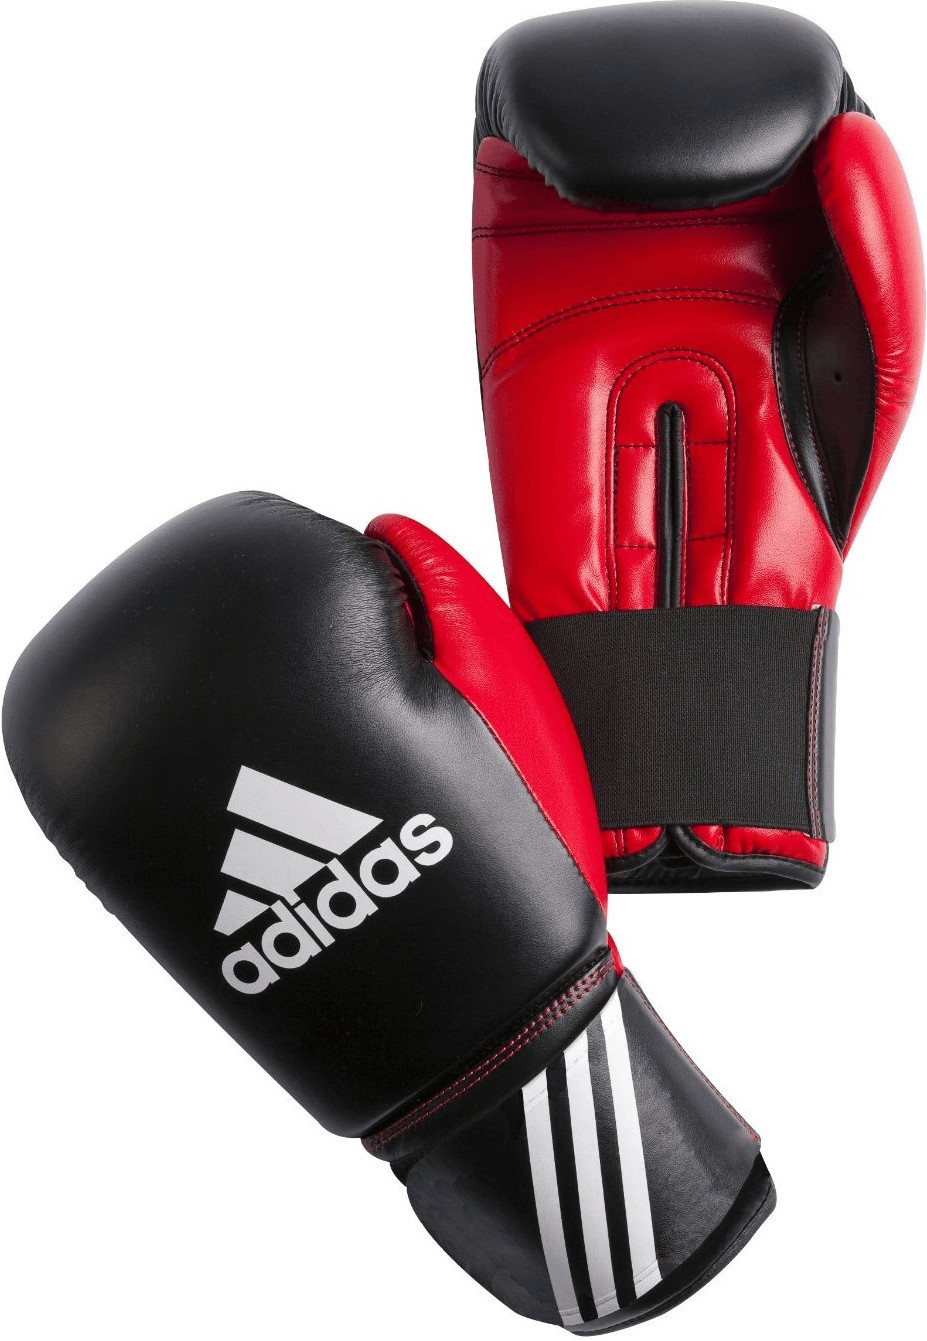 Adidas Response Boxing Glove